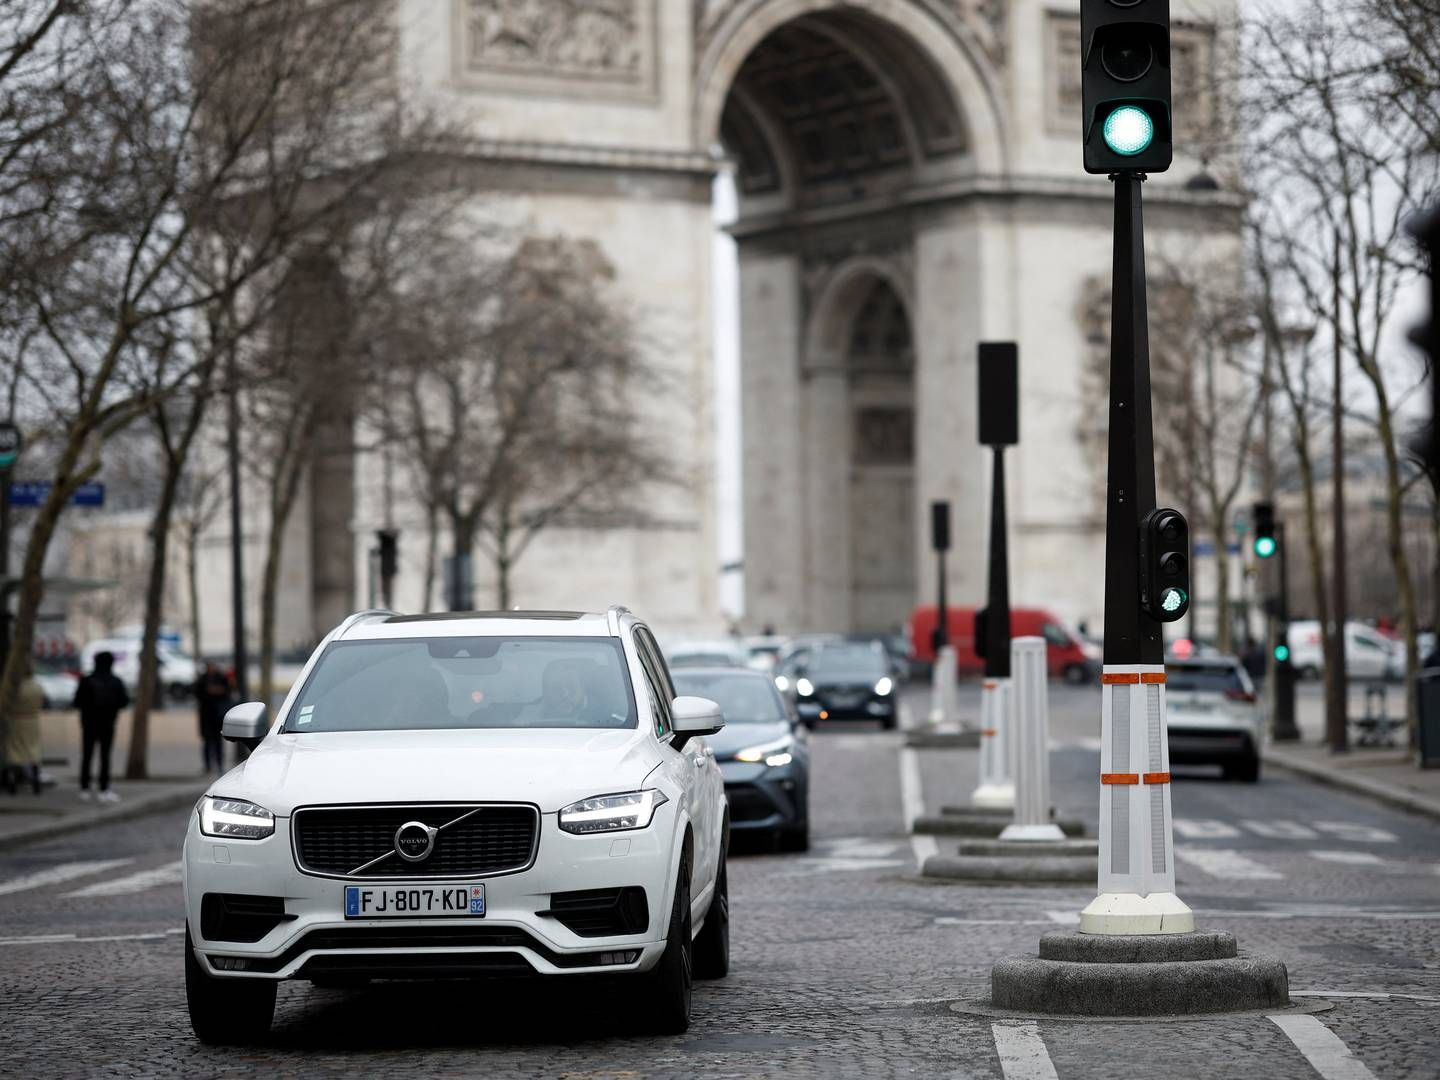 Snart bliver det markant dyrere at parkere i Paris. | Foto: Benoit Tessier/Reuters/Ritzau Scanpix